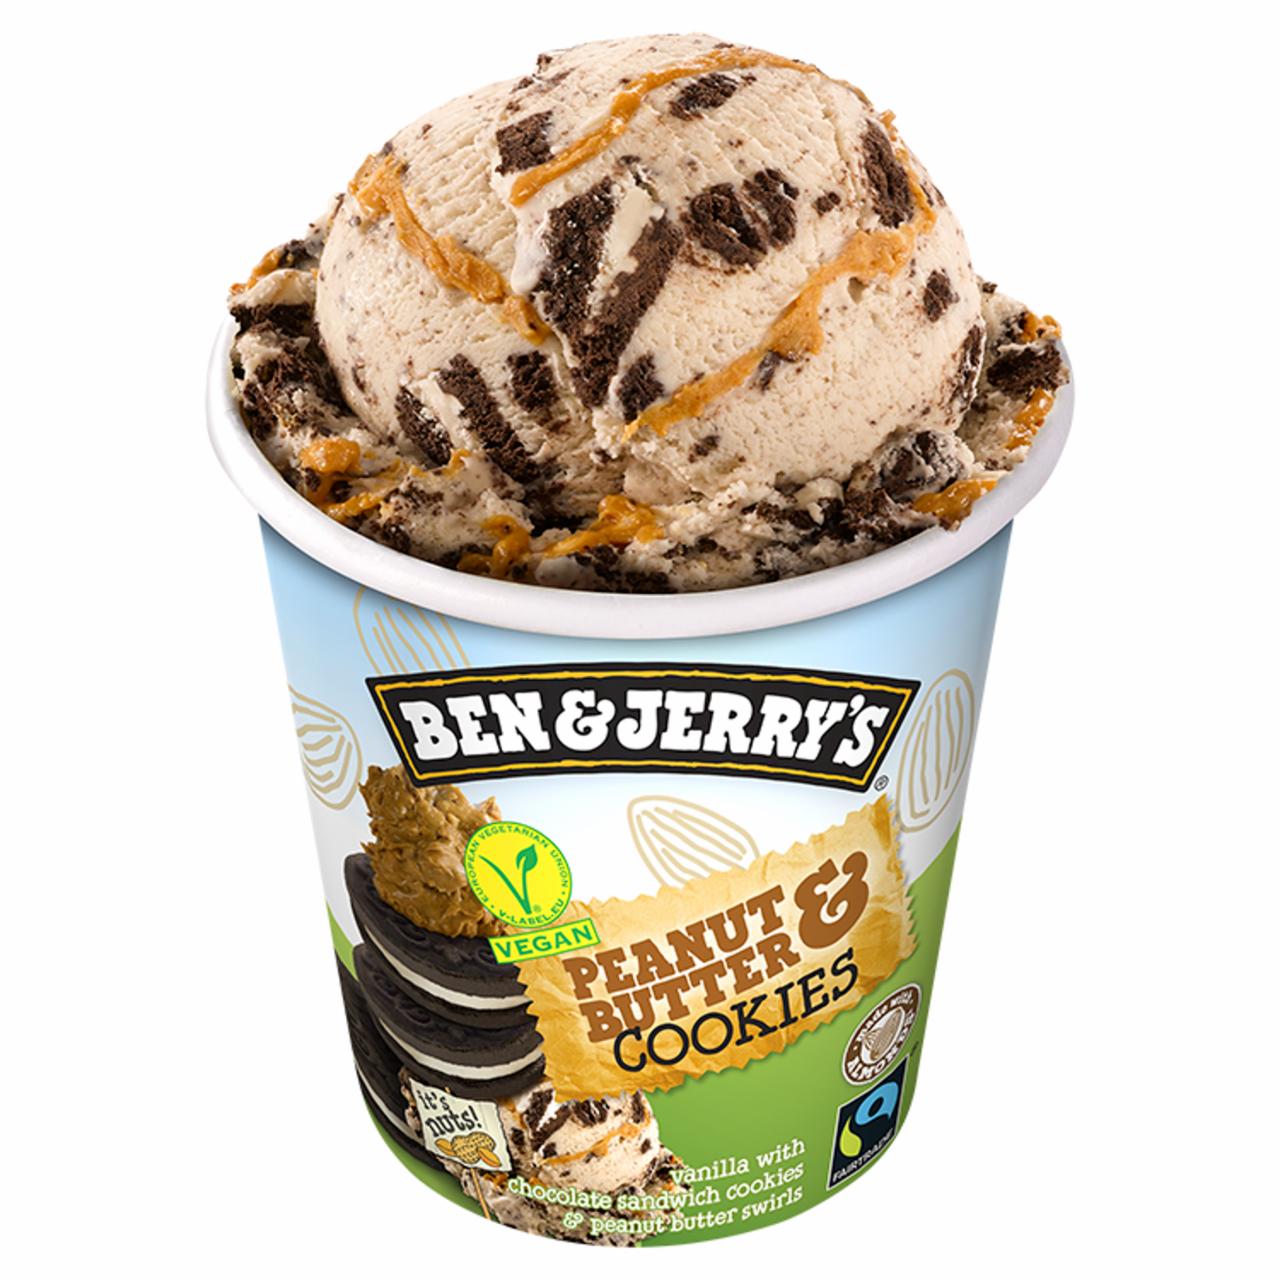 Képek - Ben & Jerry's Vegán Peanut Butter Cookies jégkrém 500 ml